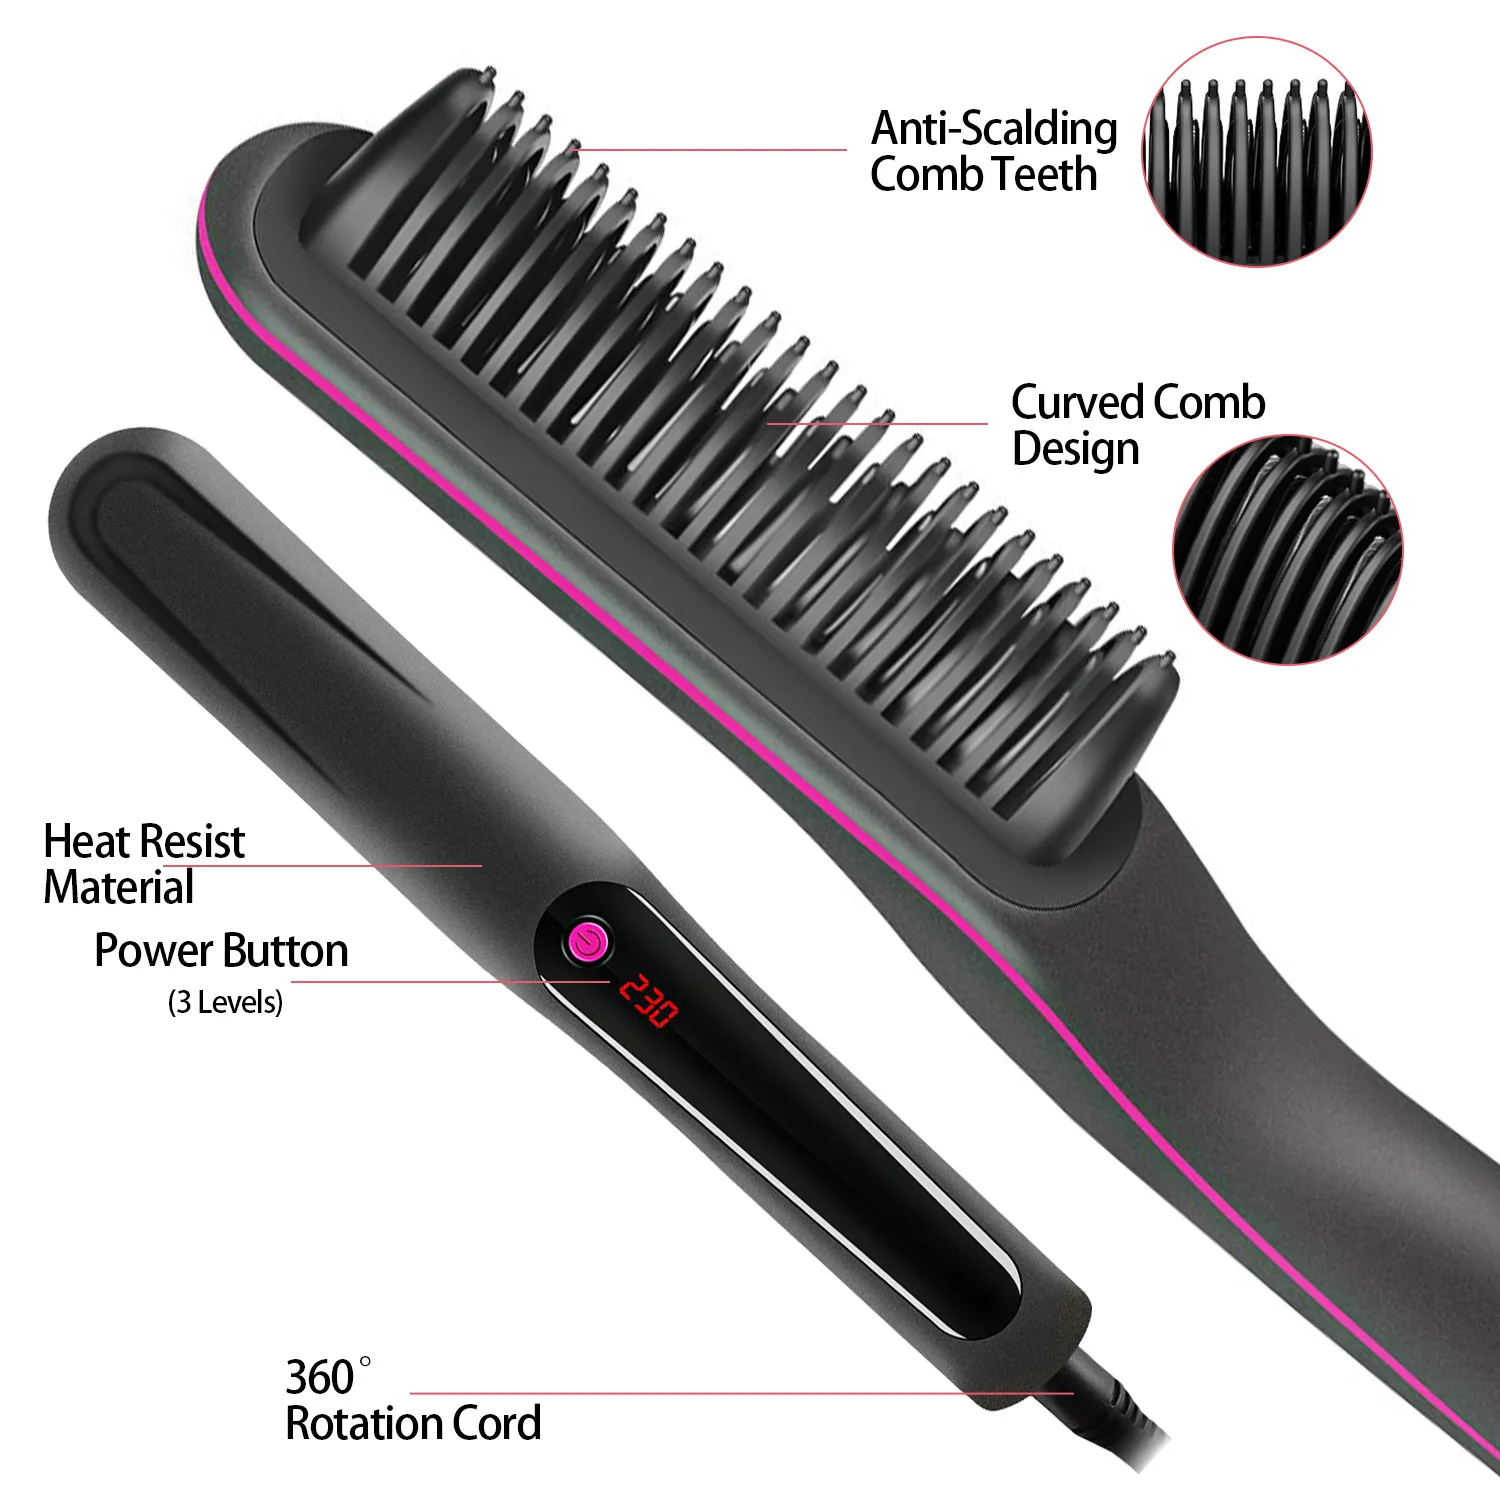 Amazon Hair Straightener Beard Curling Iron Comb Cepillo Para Cabello Electric Massage Curler Stijltang Hair Straightening Brush